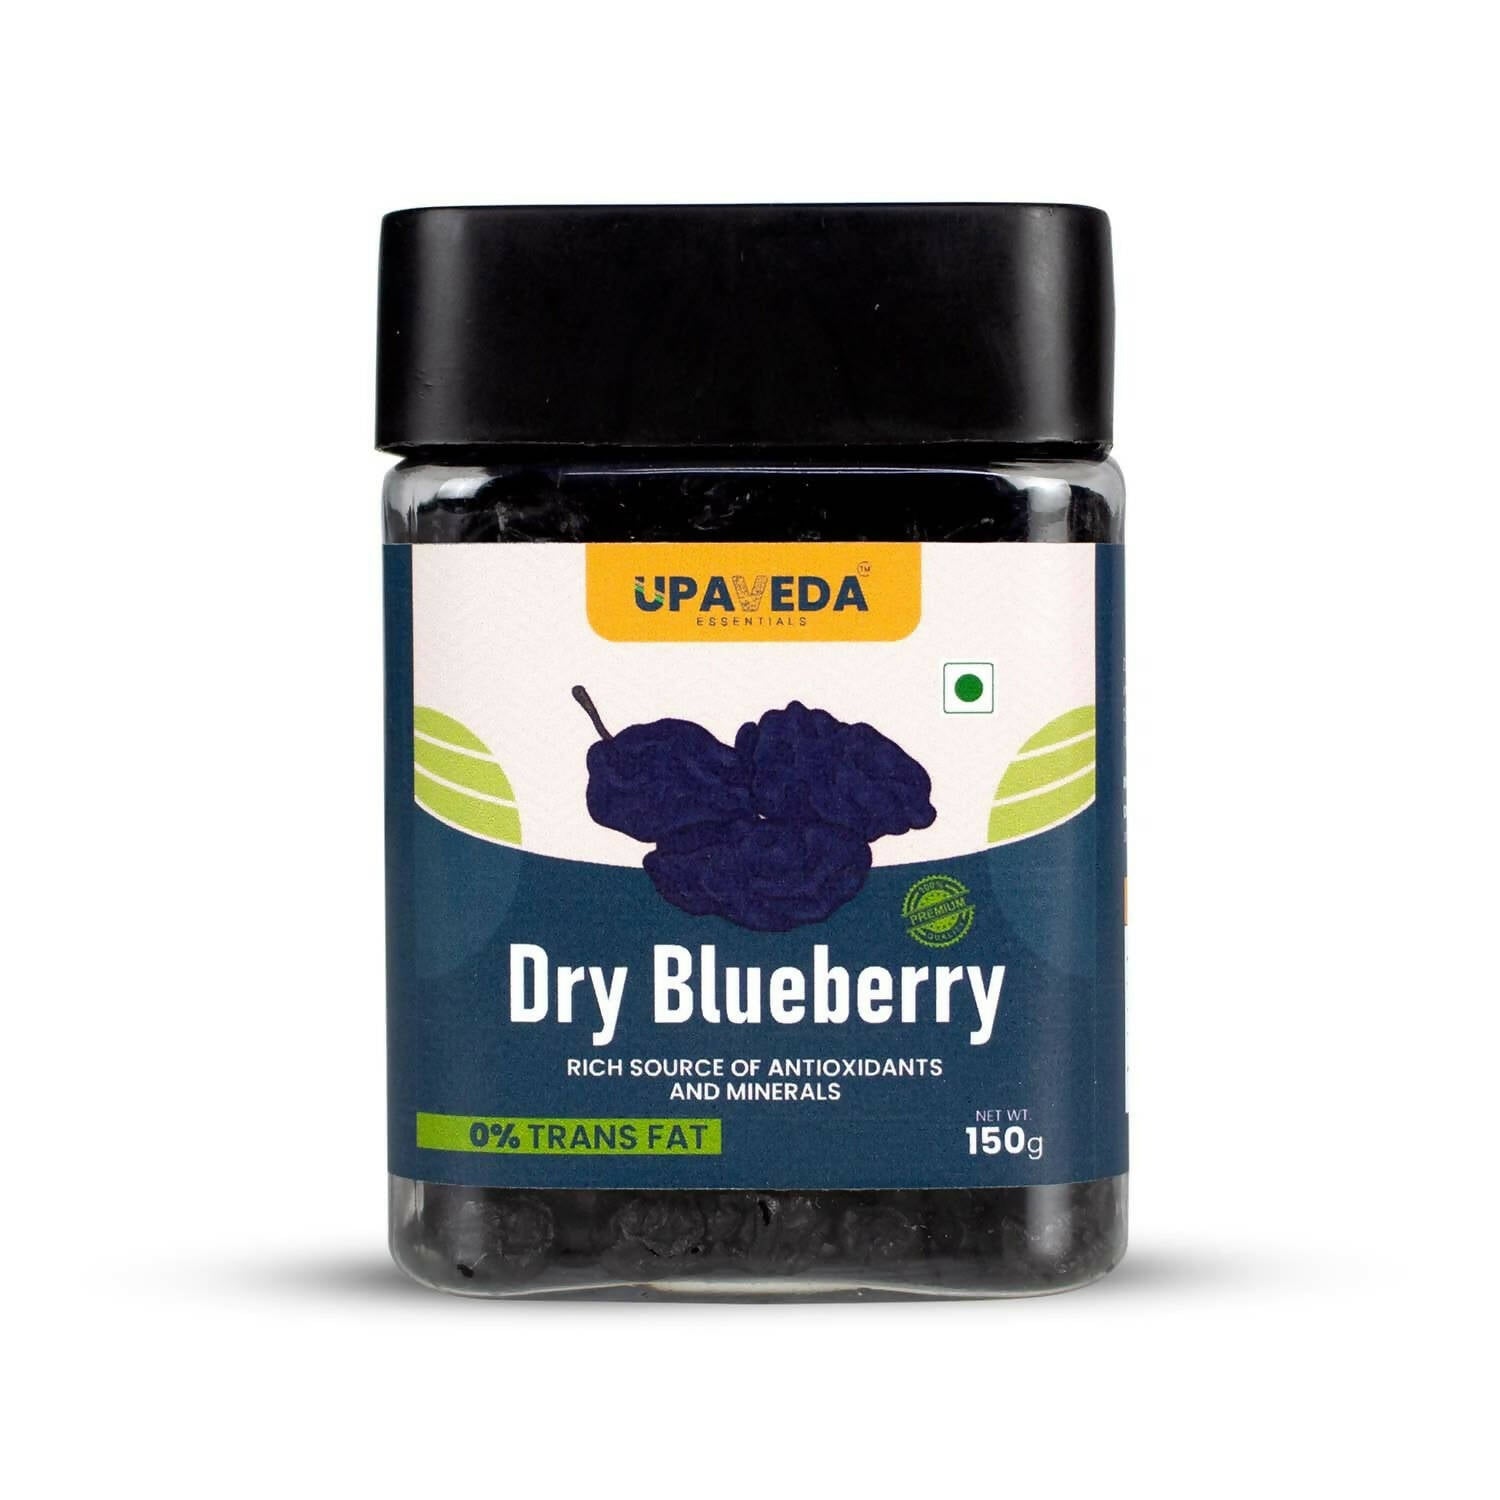 Upaveda Dry Blueberries - BUDNE